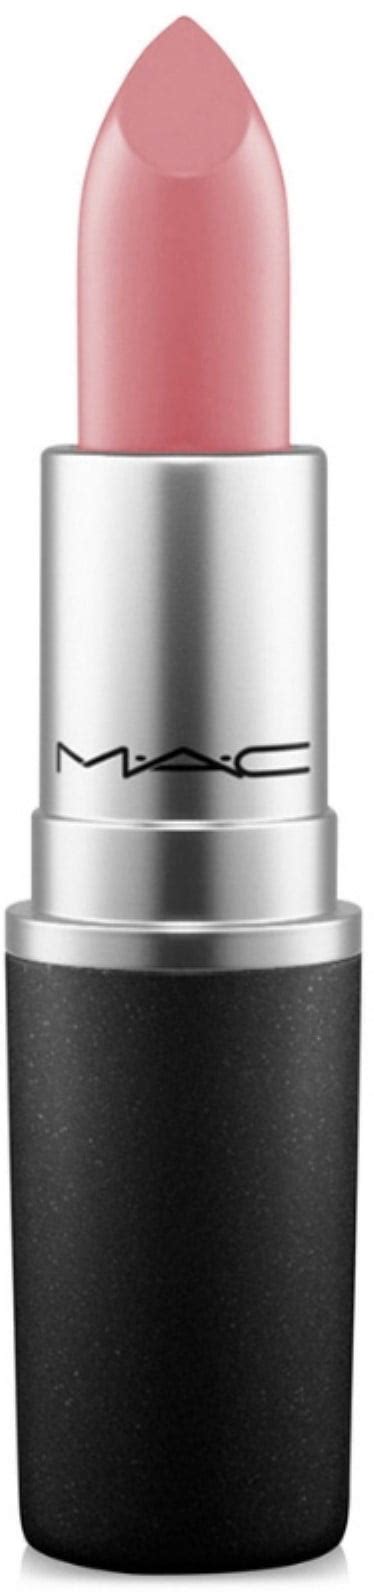 MAC MAC Satin Lipstick Brave Oz Walmart Com